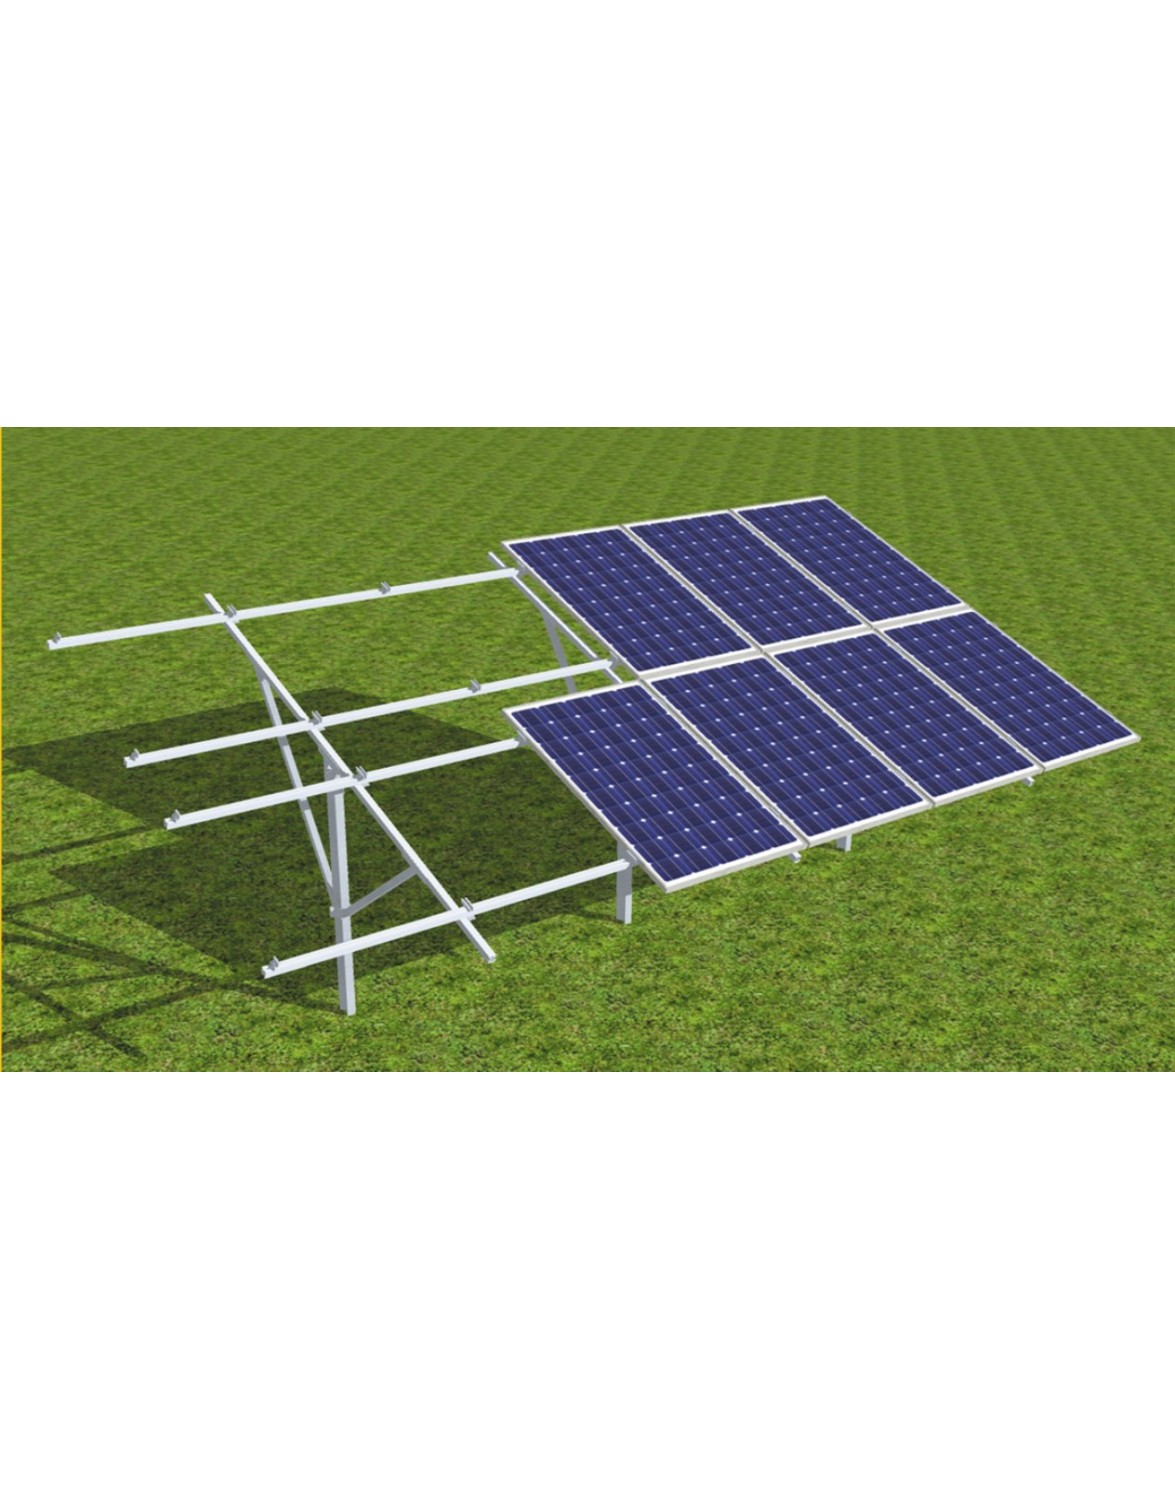 Комплект креплений для монтажа солнечных батарей на грунт 30 кВт